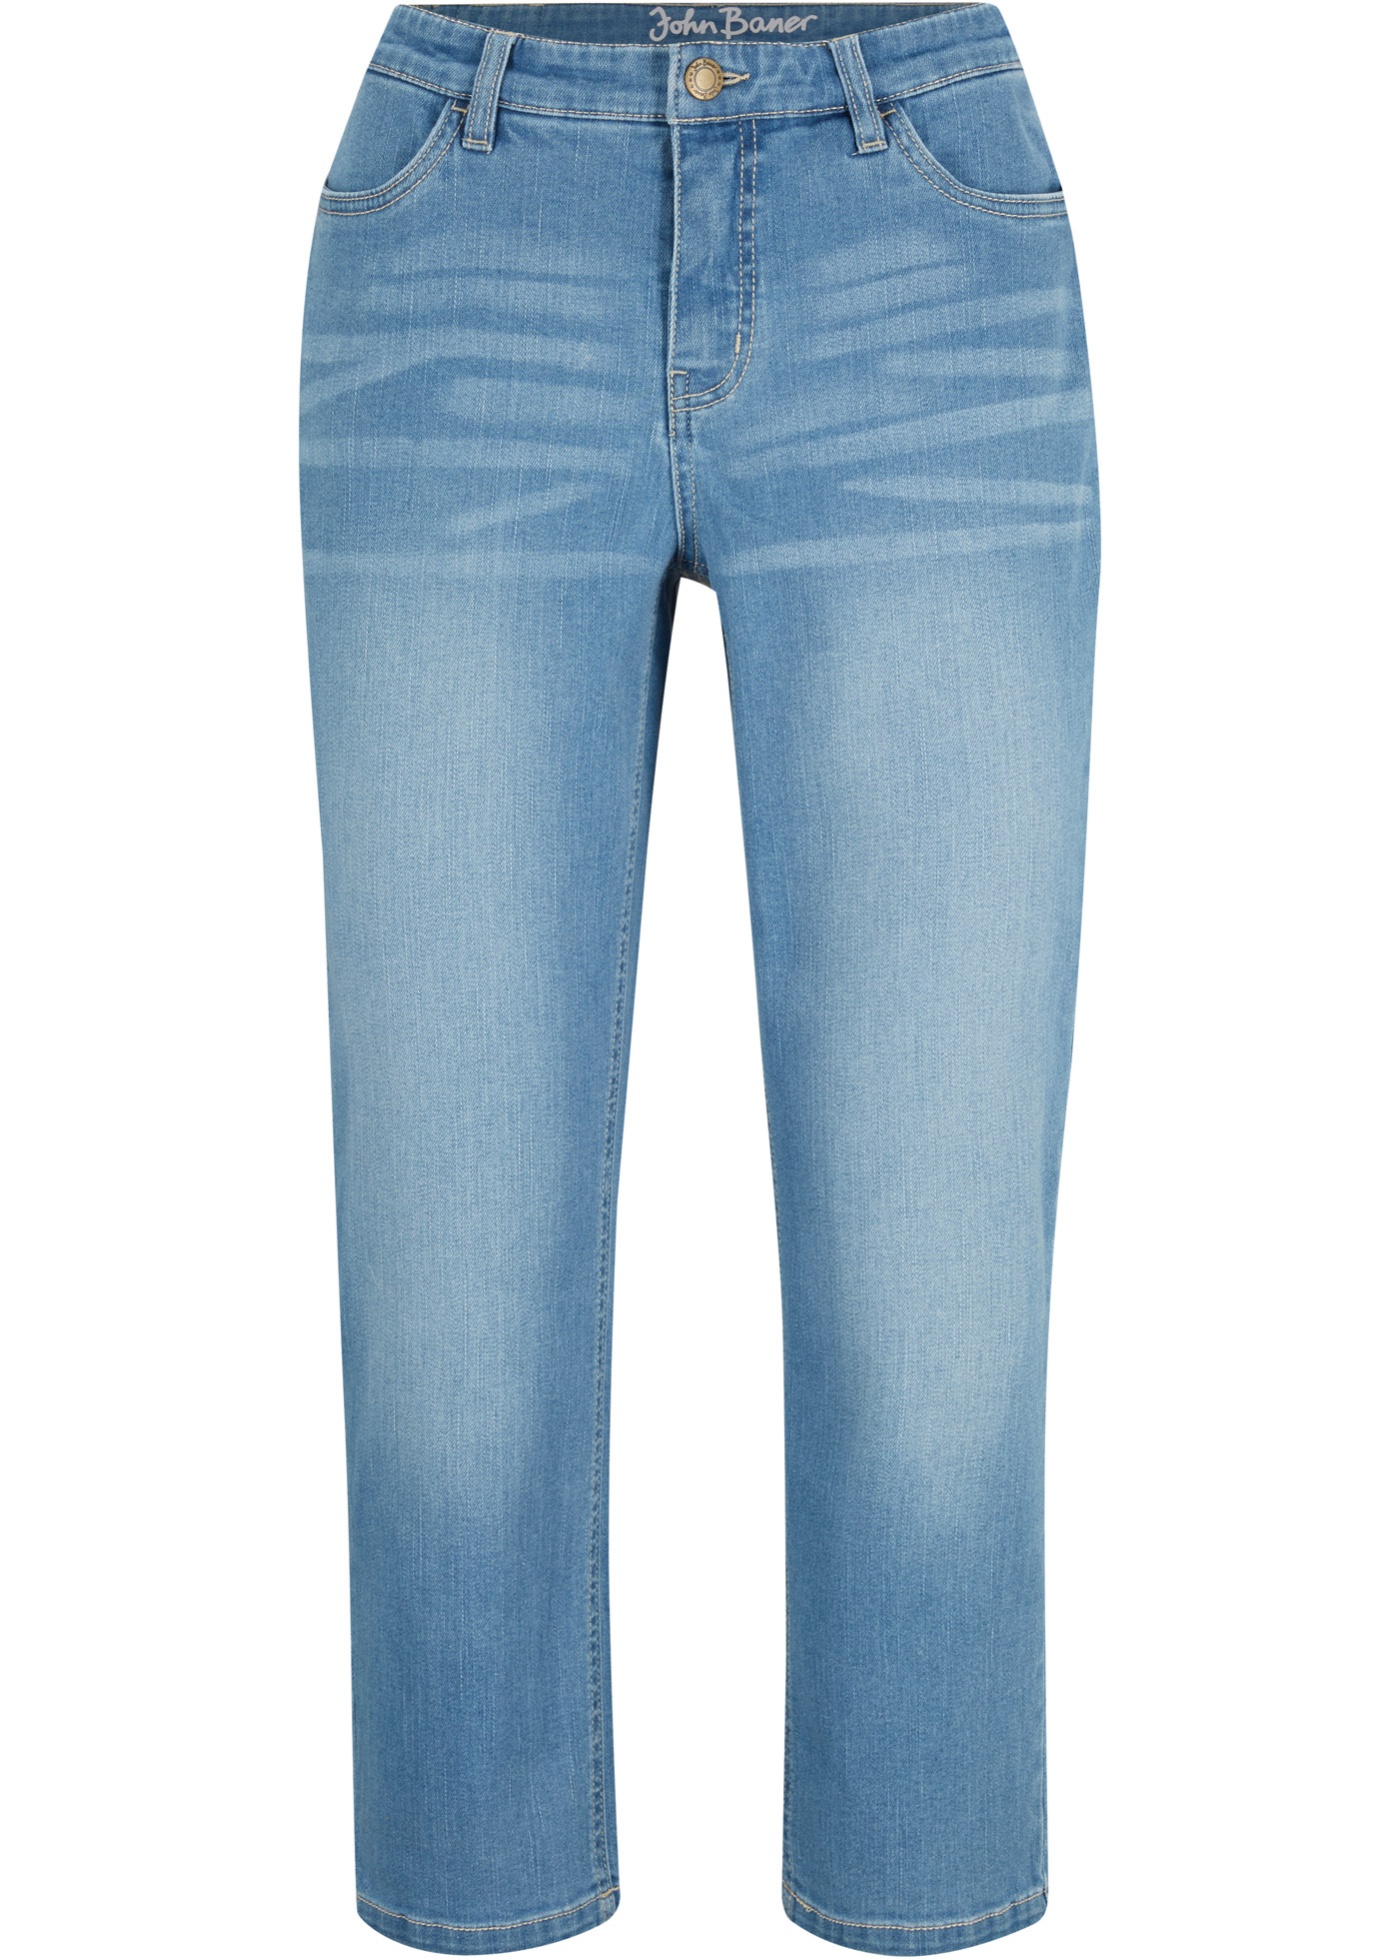 7/8 jeans, comfort stretch